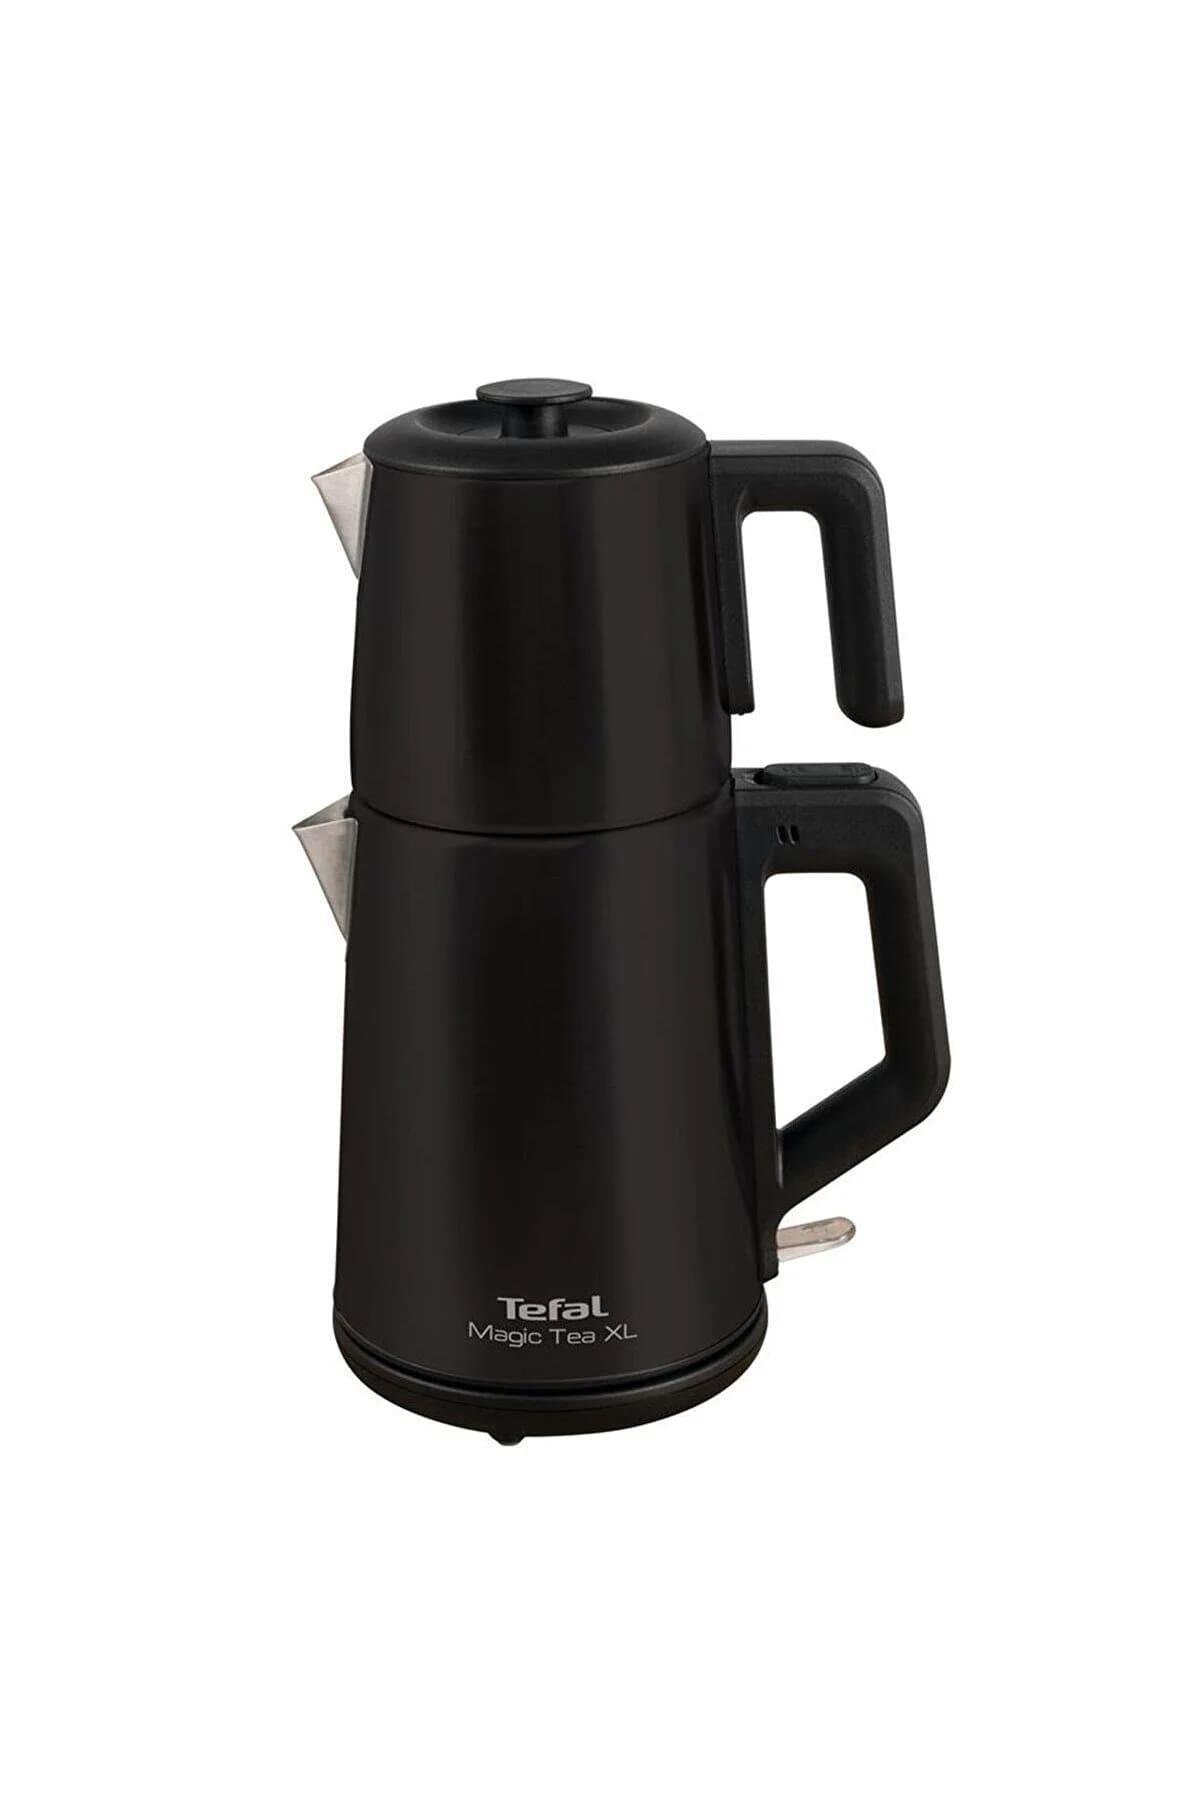 Tefal Magic Tea XL Çay Makinesi - Siyah | Hedef Avm